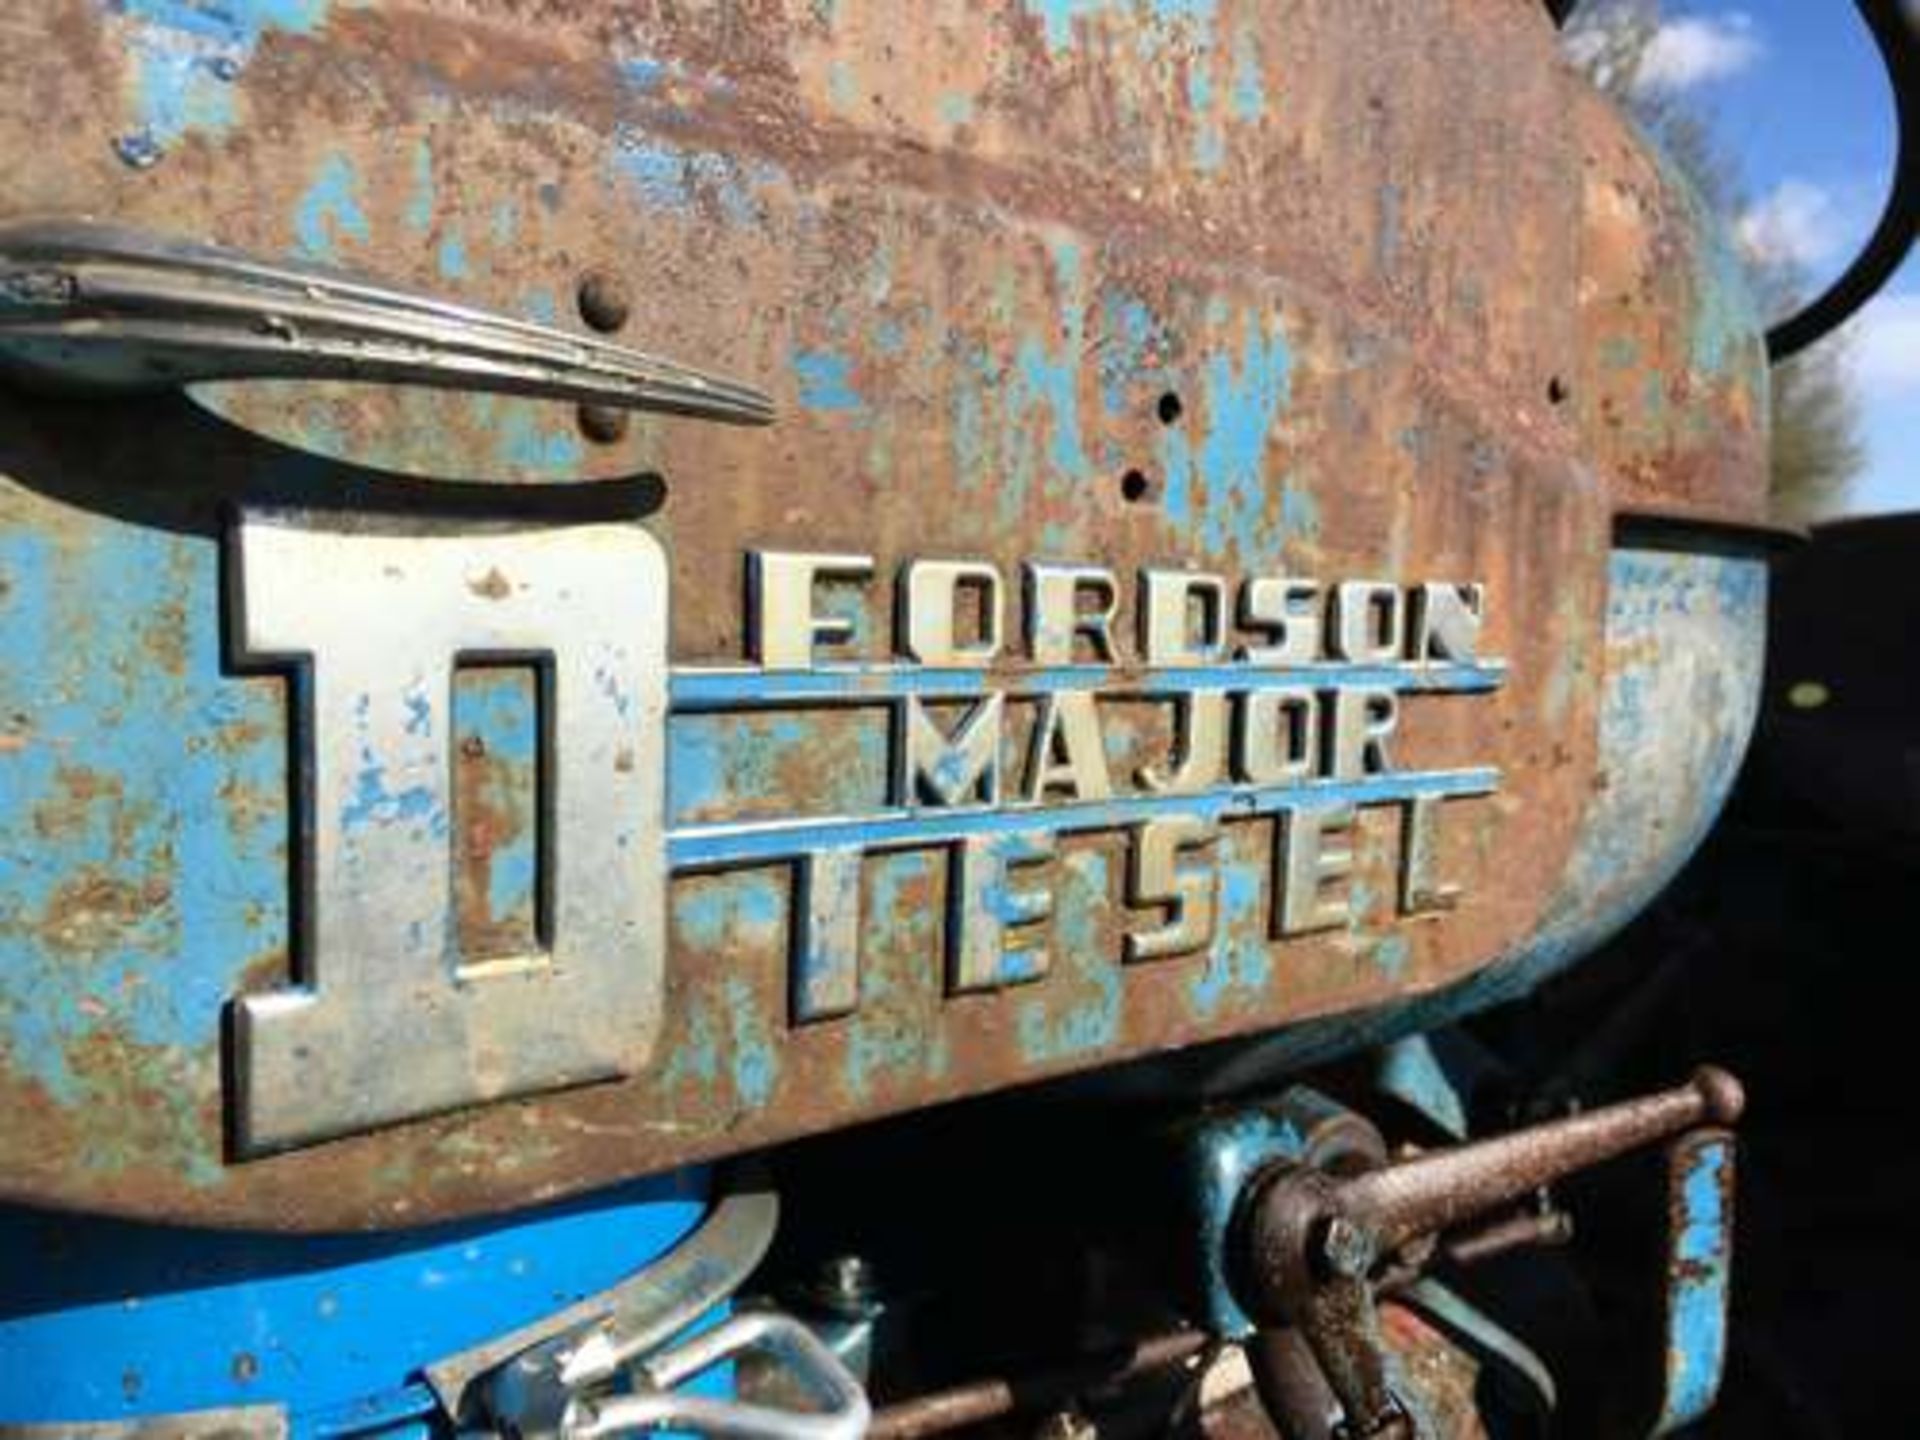 1954 Fordson Major Diesel Tractor - Image 15 of 17